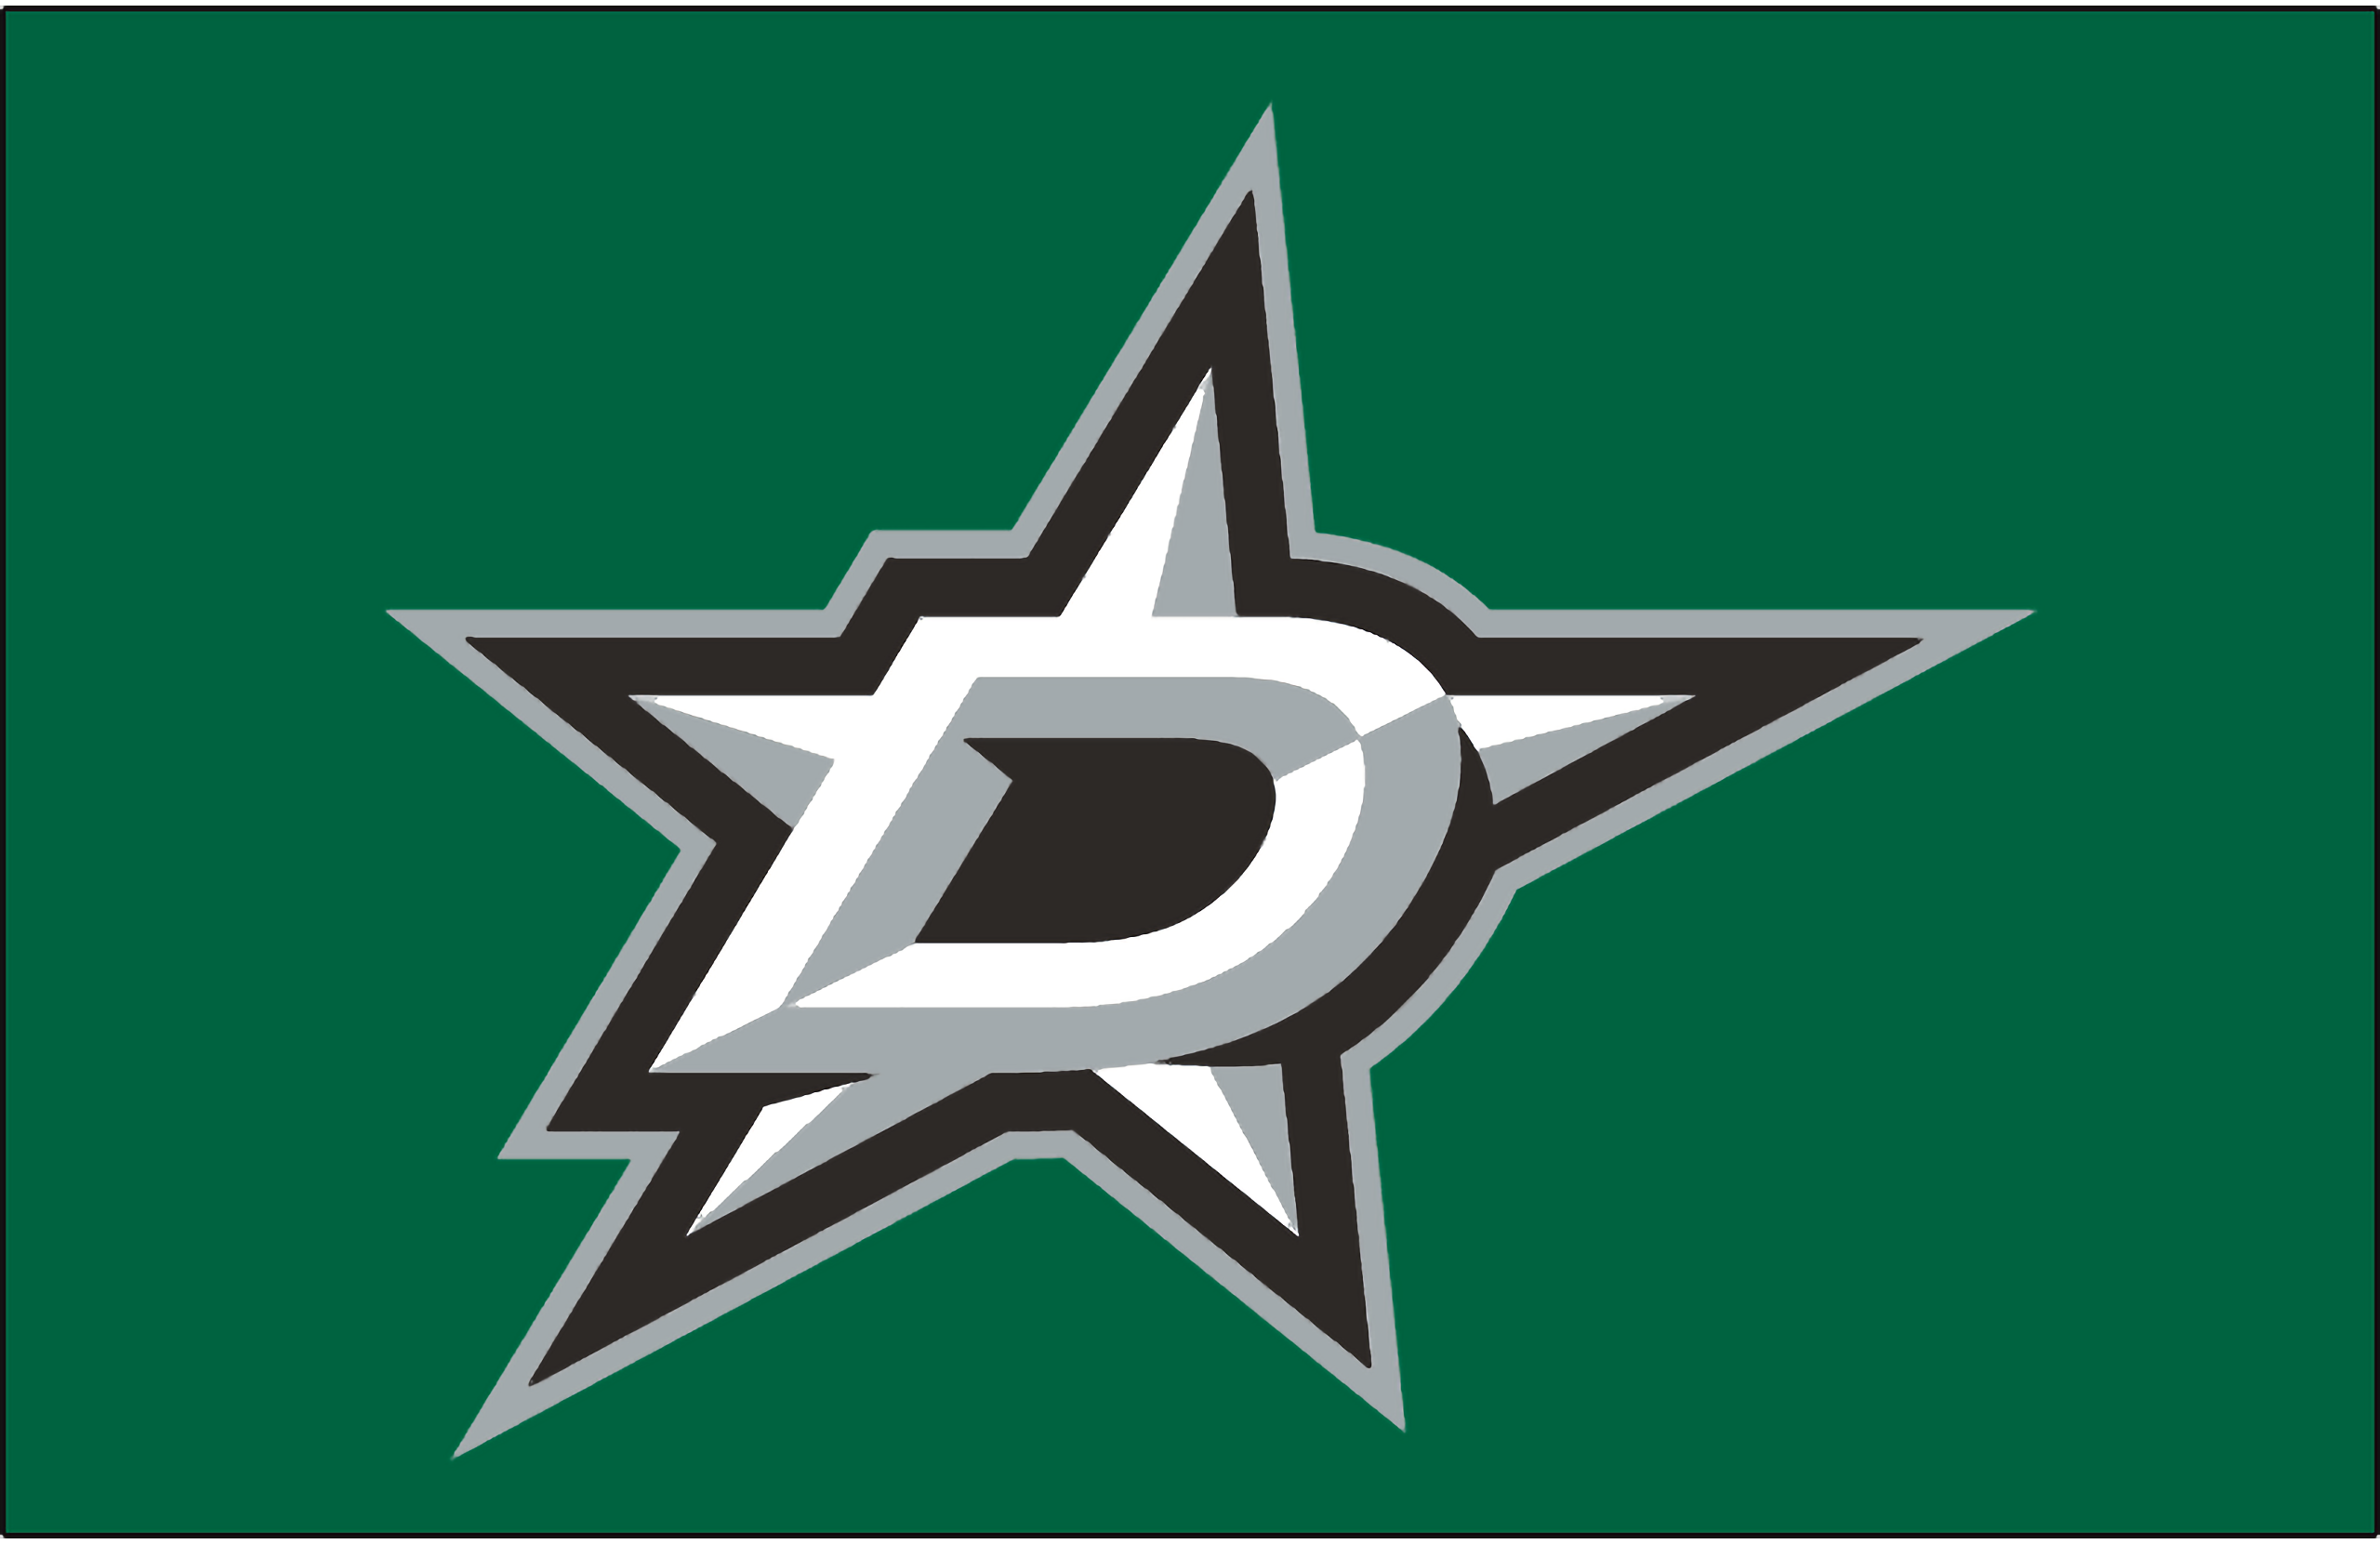 Dallas Stars New Logo Wallpaper